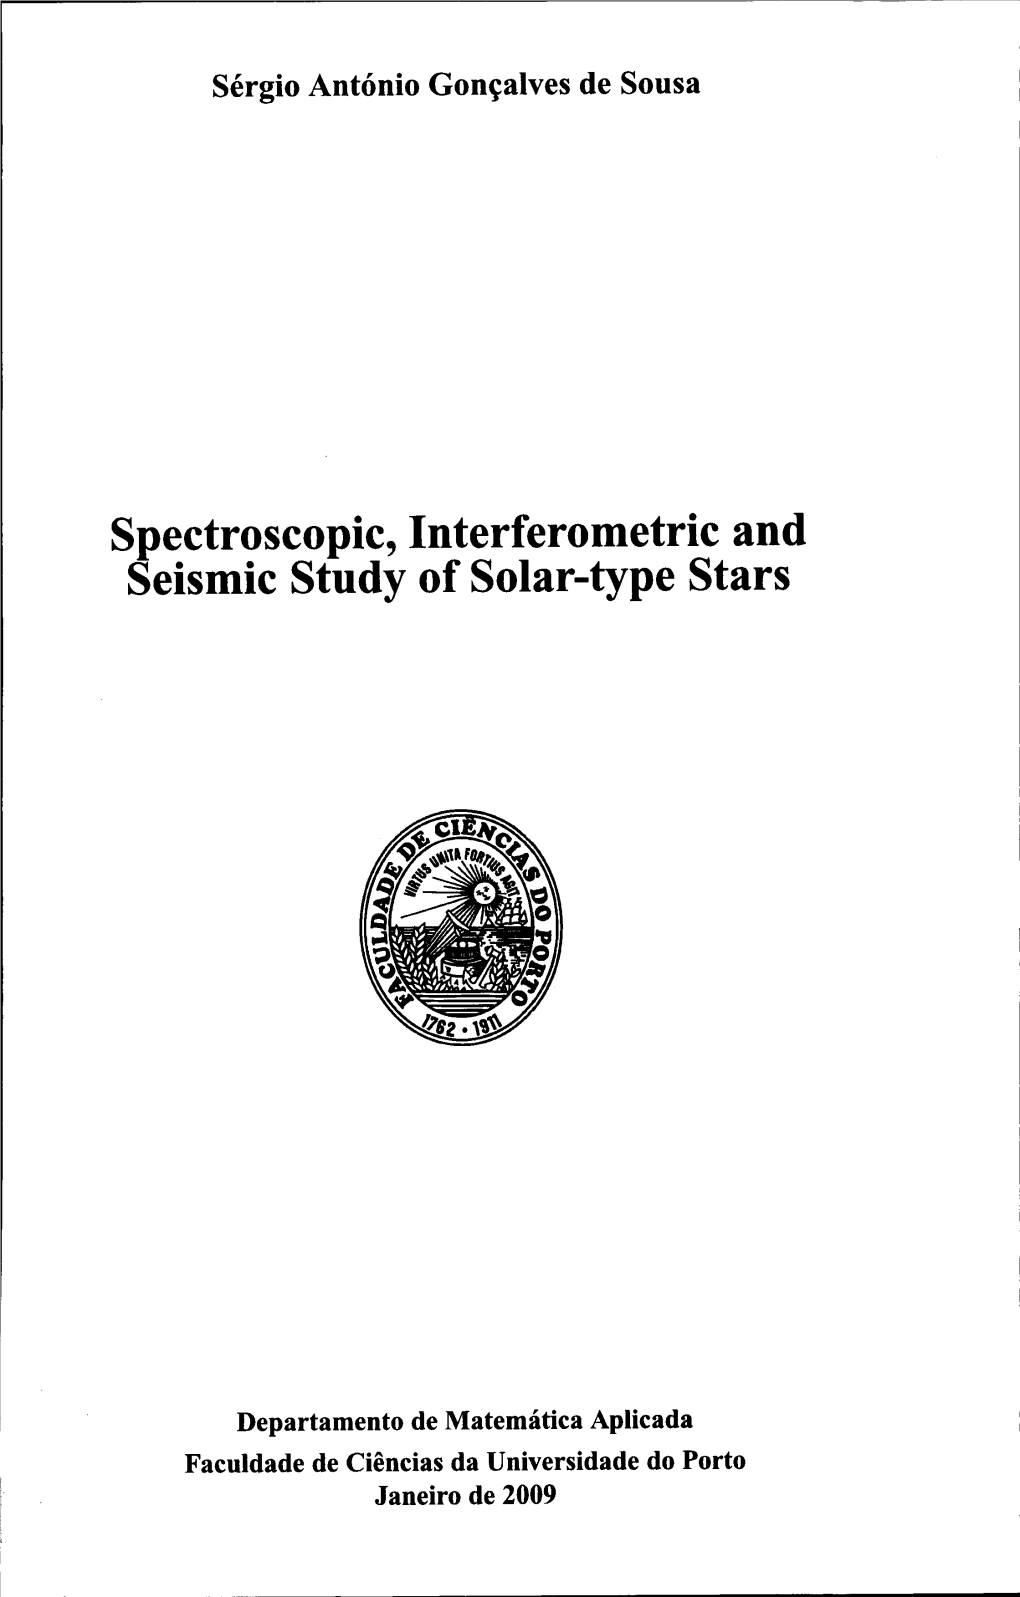 Spectroscopic, Interferometric and Seismic Study of Solar-Type Stars